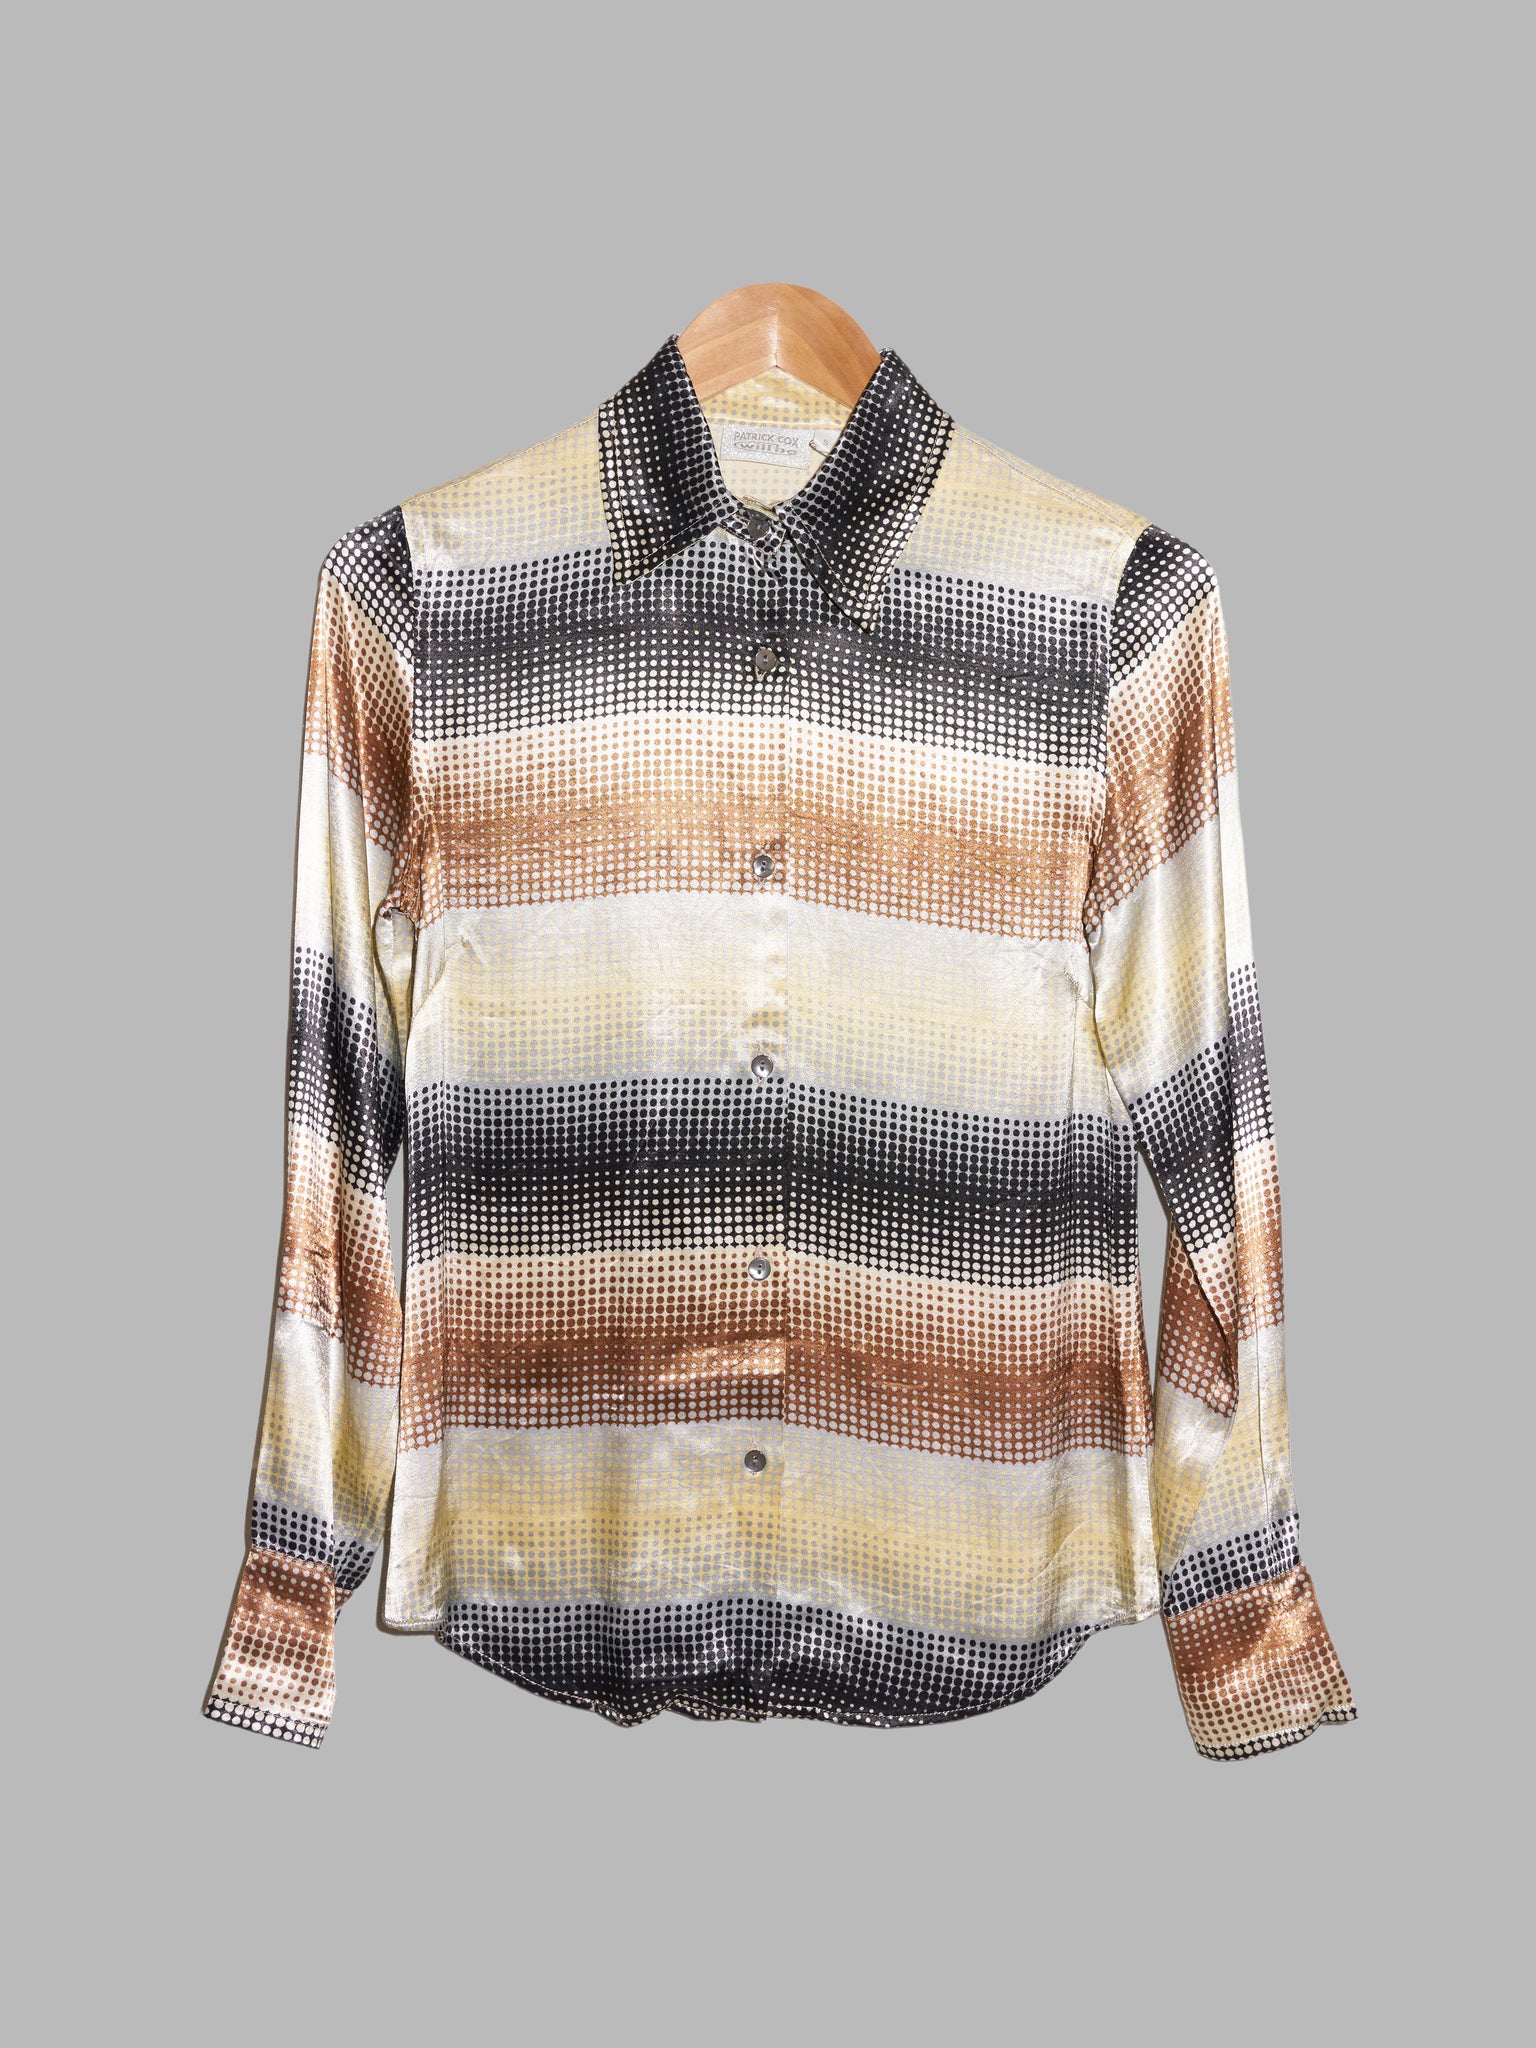 Patrick Cox Willbe 1990s multicolour spotted viscose satin shirt - S